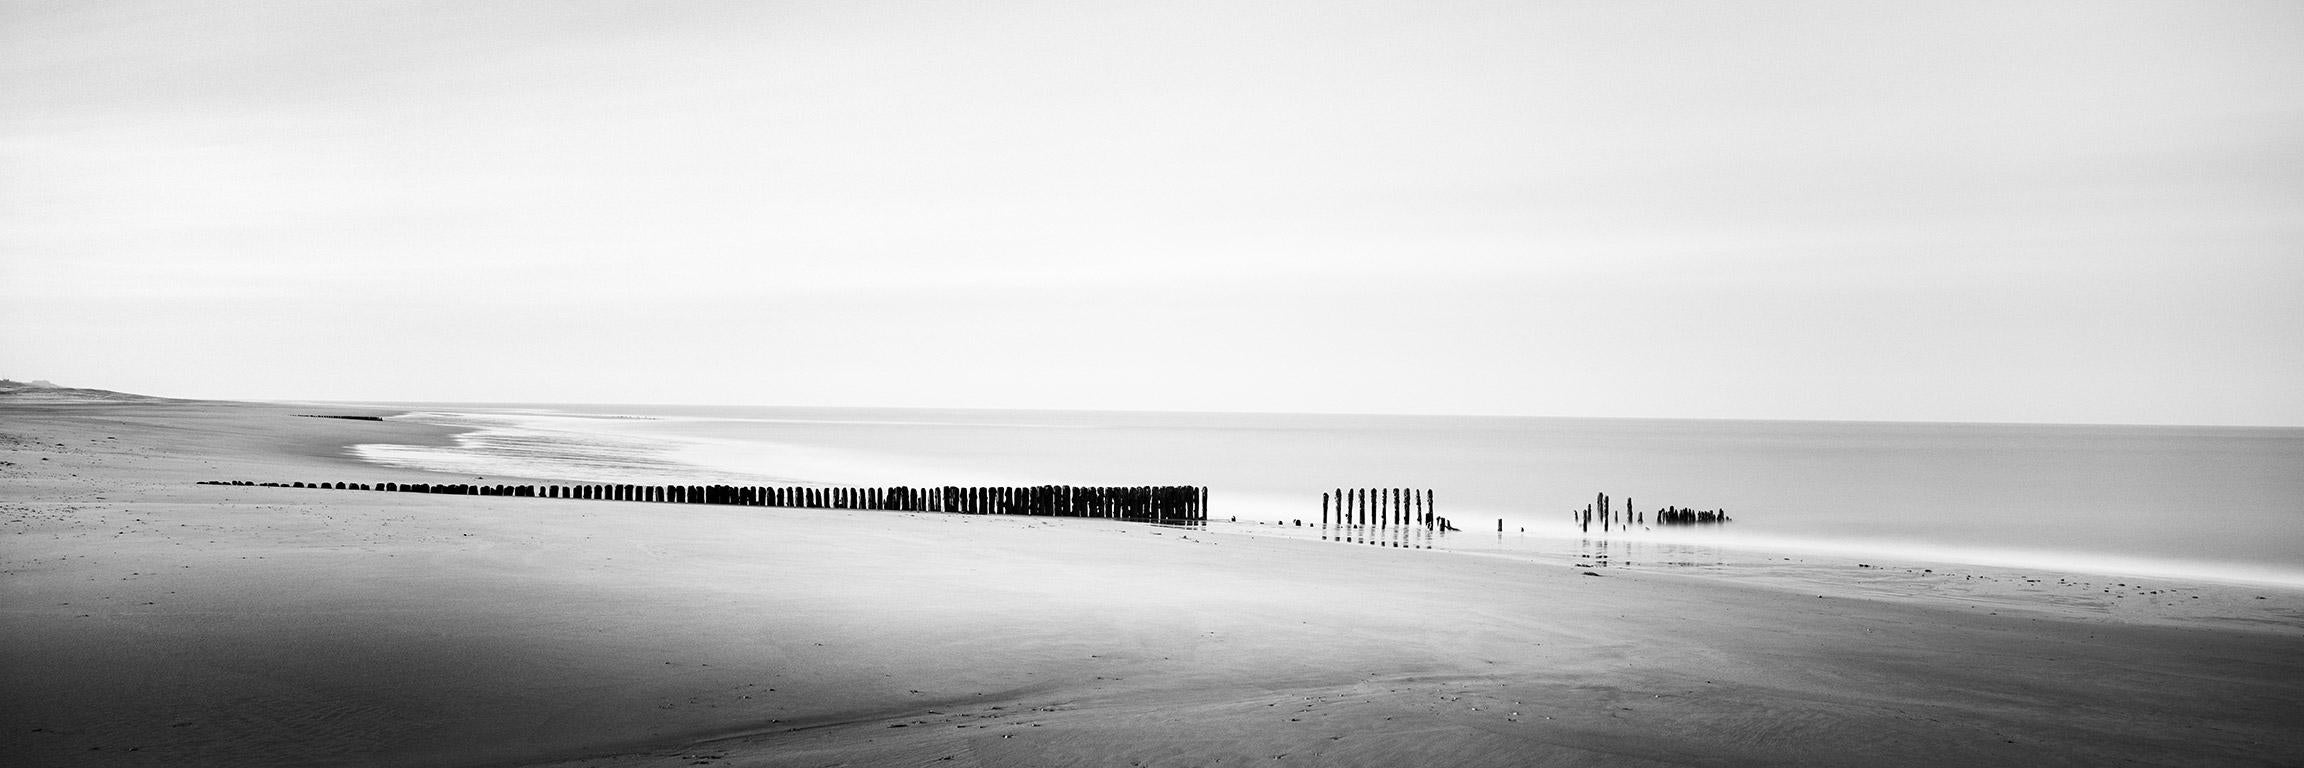 Gerald Berghammer Landscape Photograph - Broken Groyne, Beach, Sylt, Germany, black and white landscape photography print